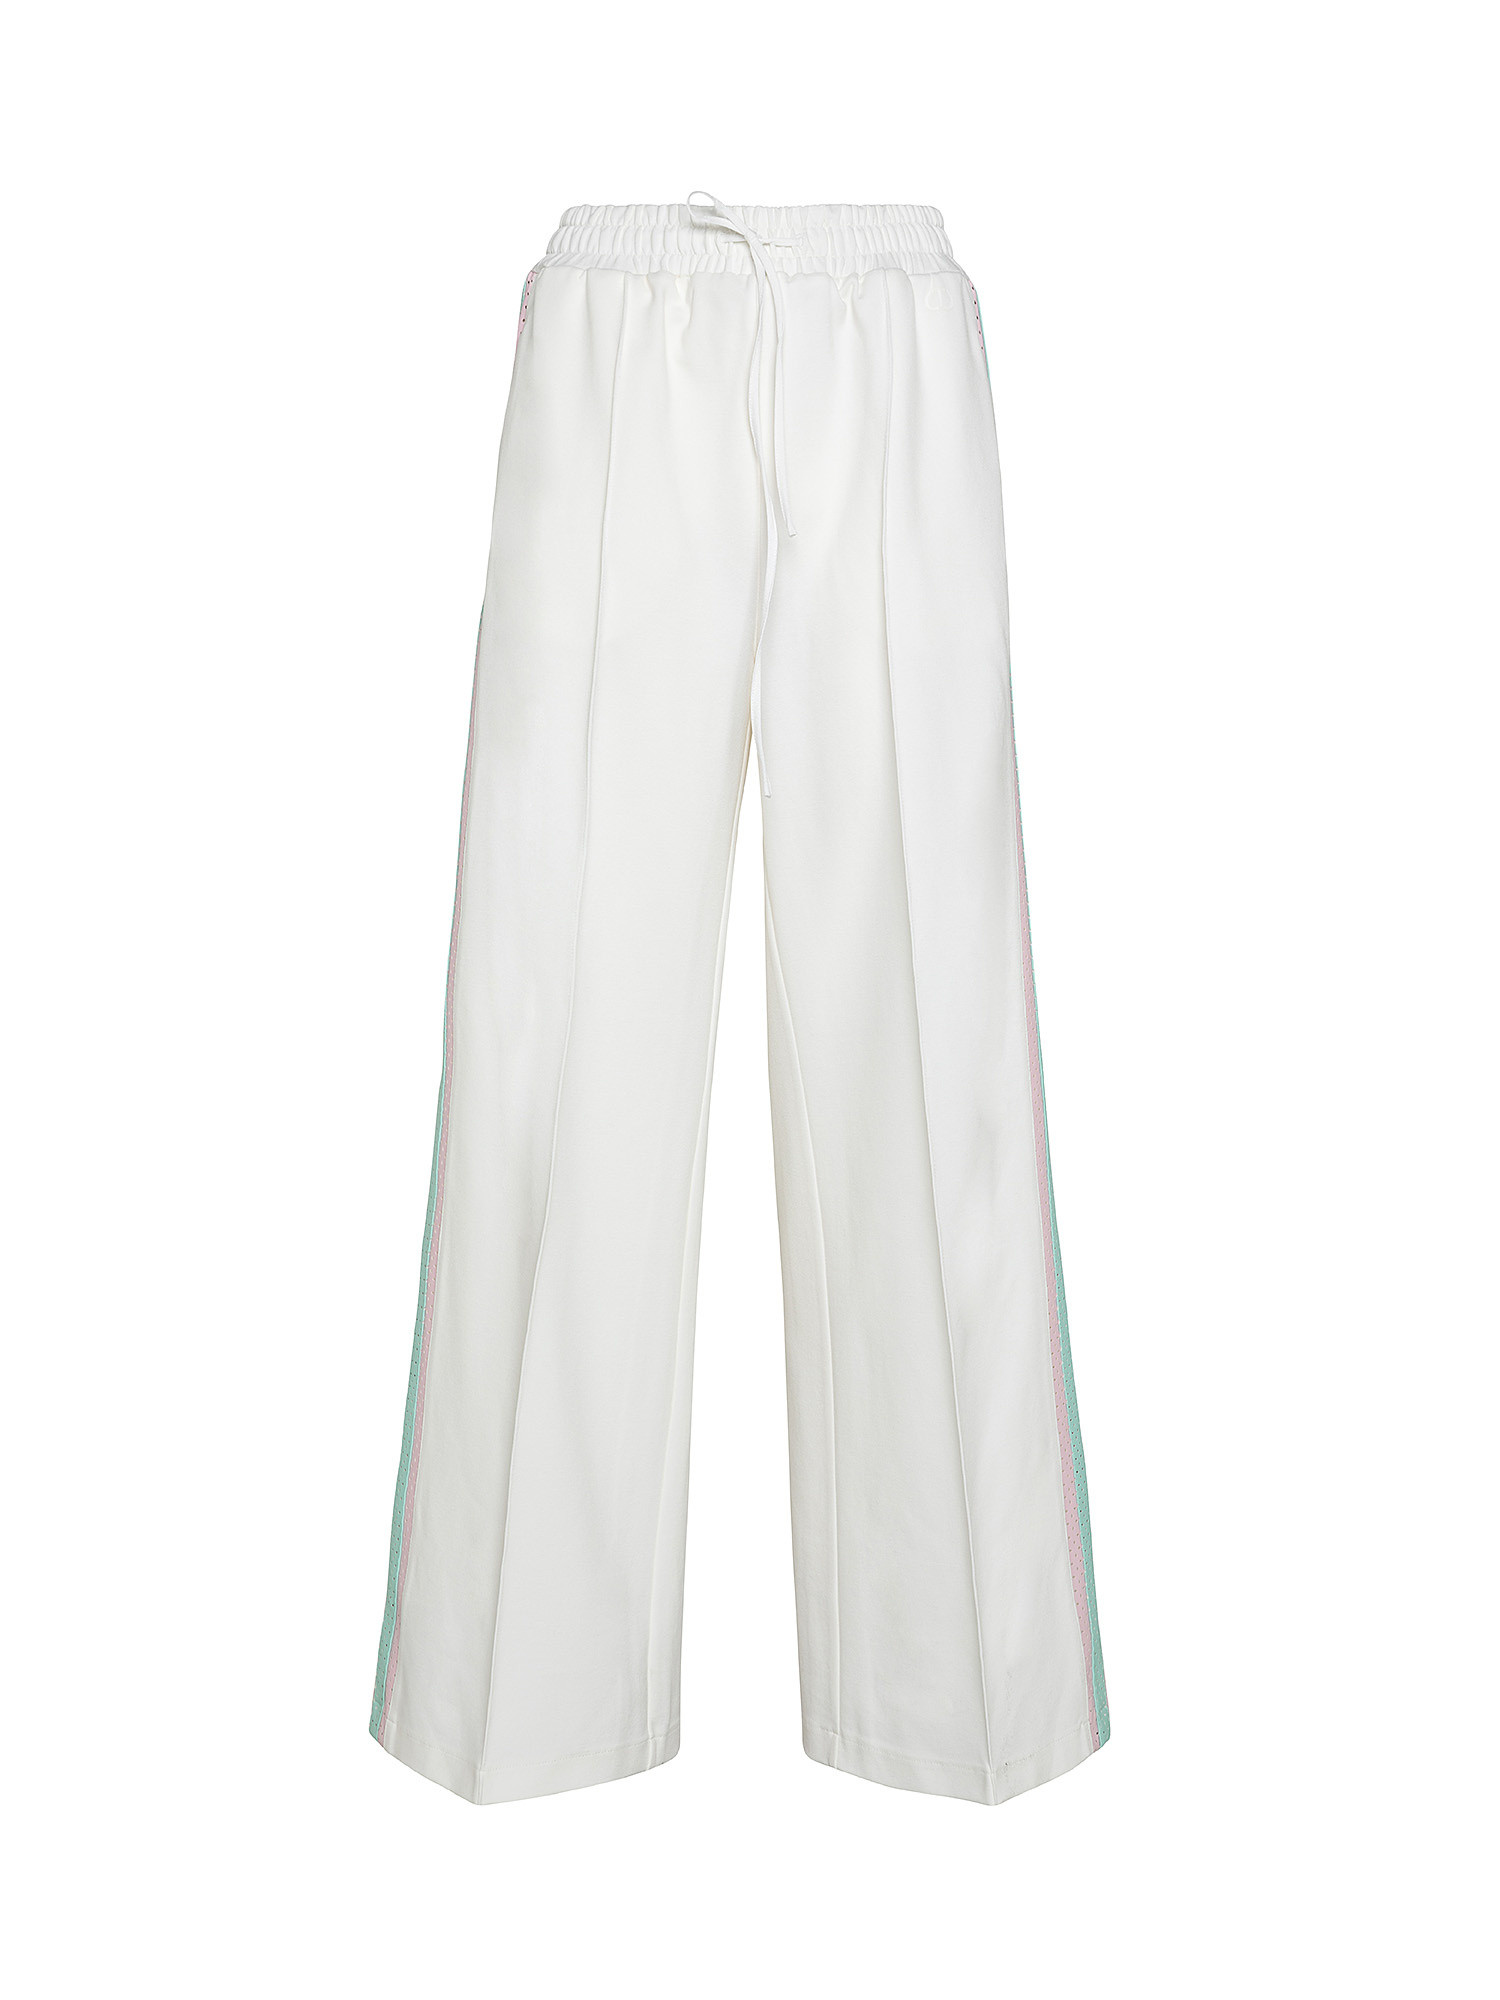 Pantalone con inserti traforati, Bianco, large image number 0